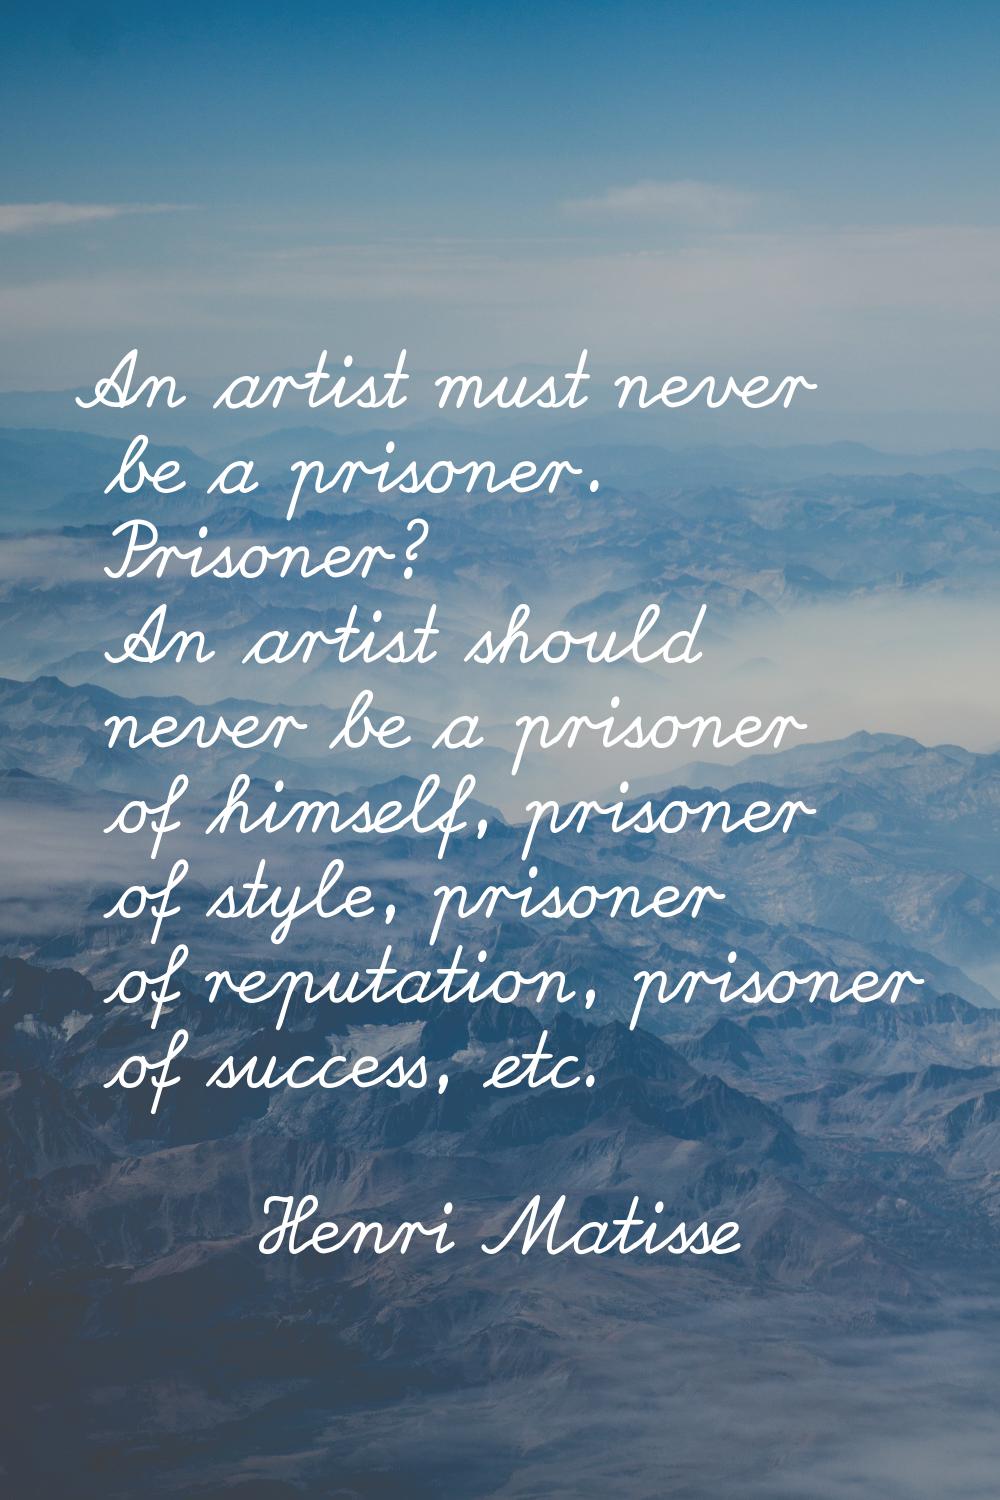 An artist must never be a prisoner. Prisoner? An artist should never be a prisoner of himself, pris